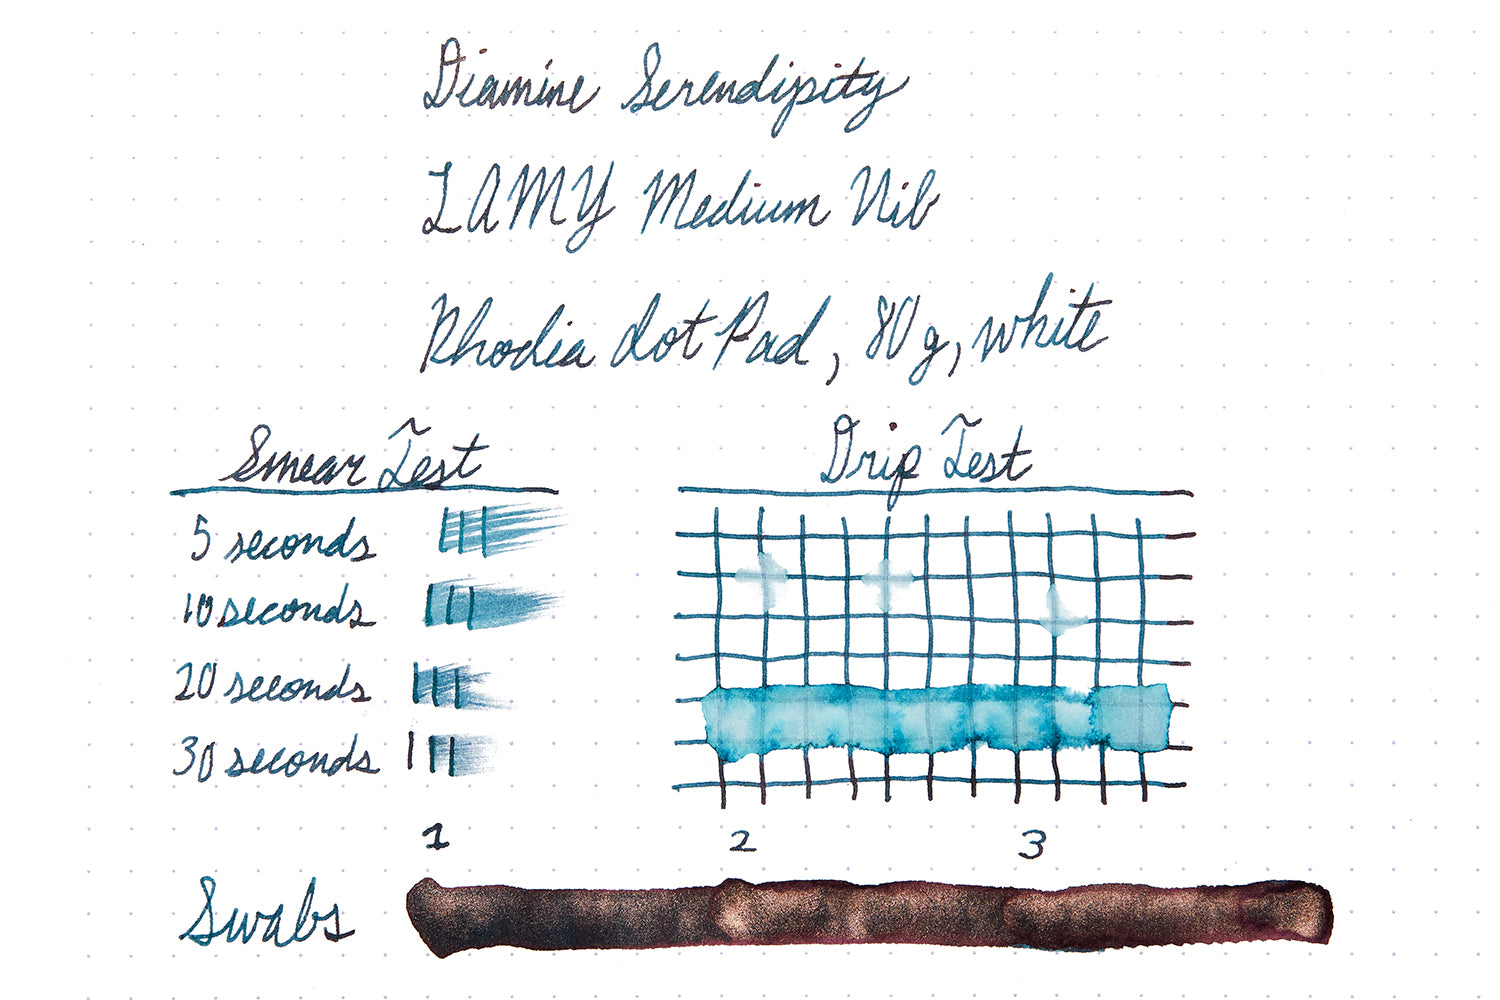 Diamine Serendipity writing test on Rhodia paper